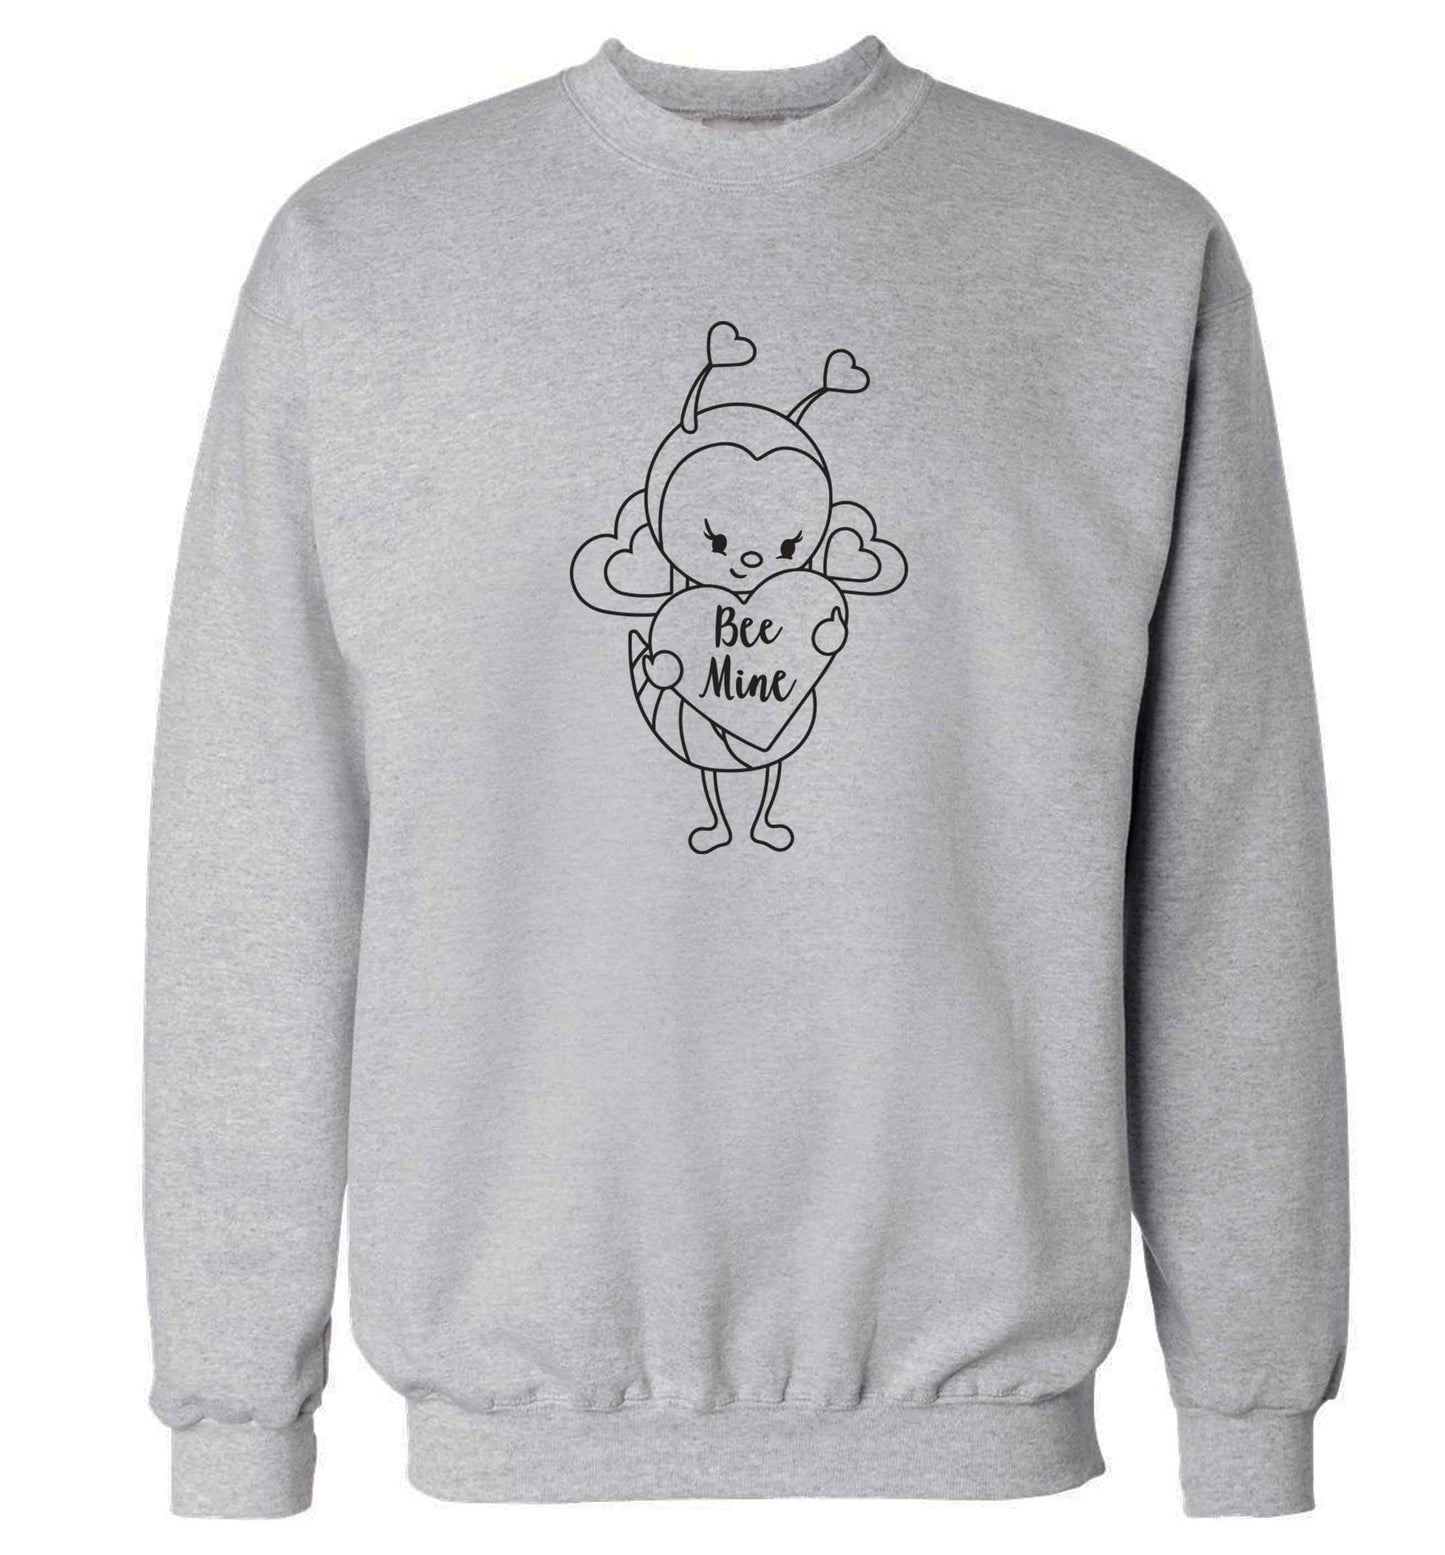 Bee mine adult's unisex grey sweater 2XL